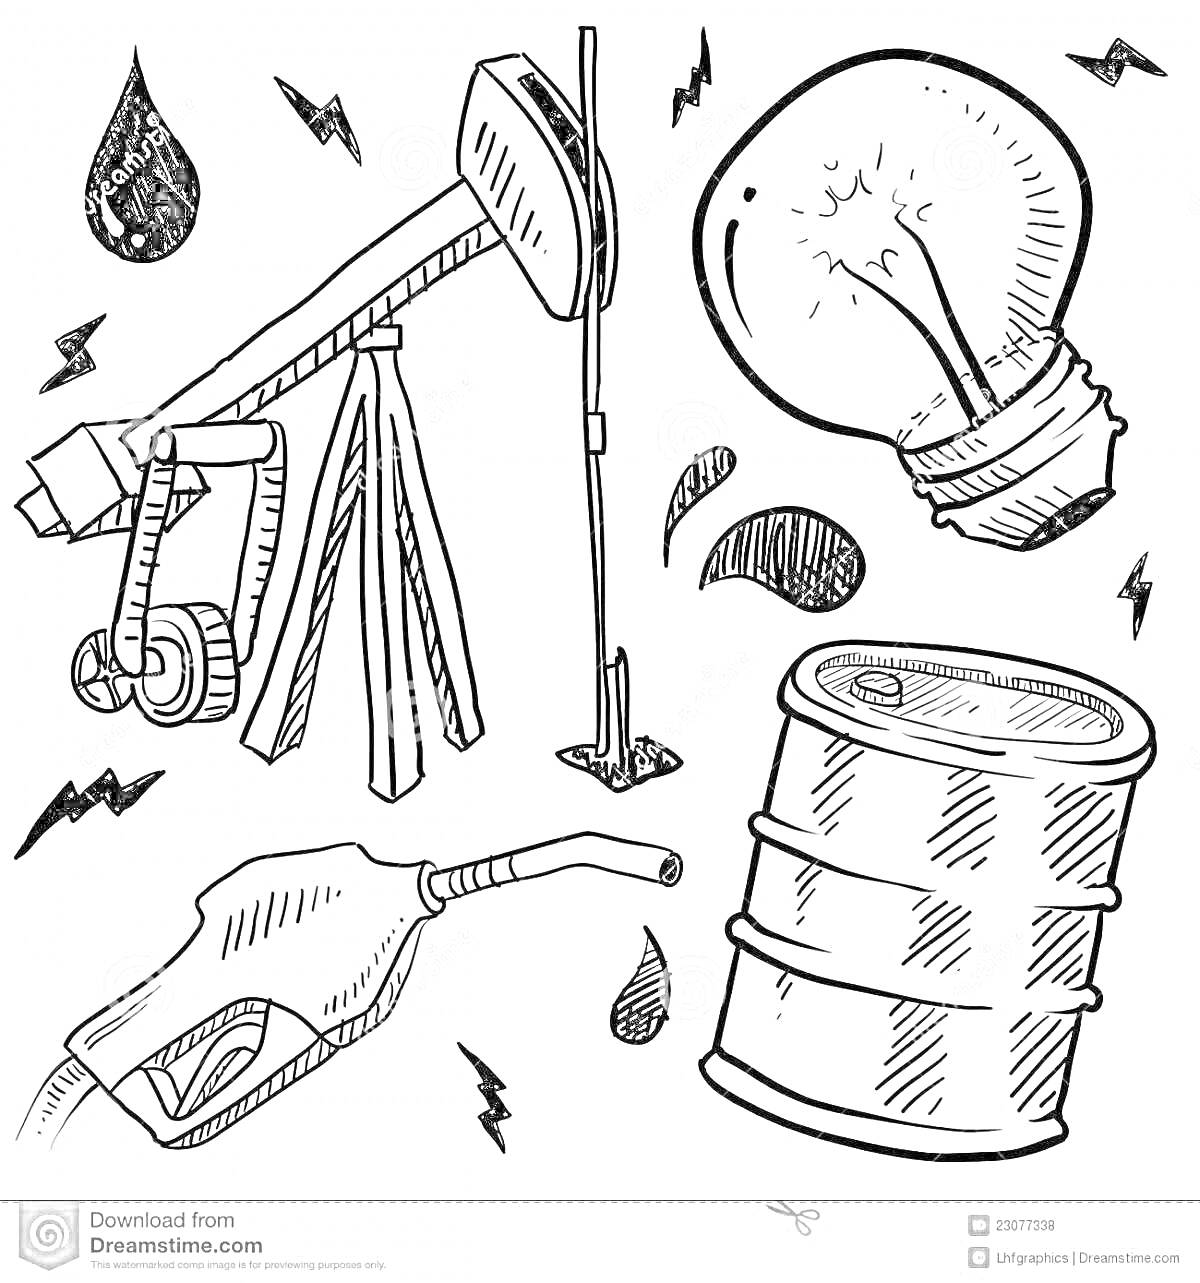 Раскраска Насос-качалка, лампочка, бочка, зарядное устройство, пятна и капли нефти, молнии.